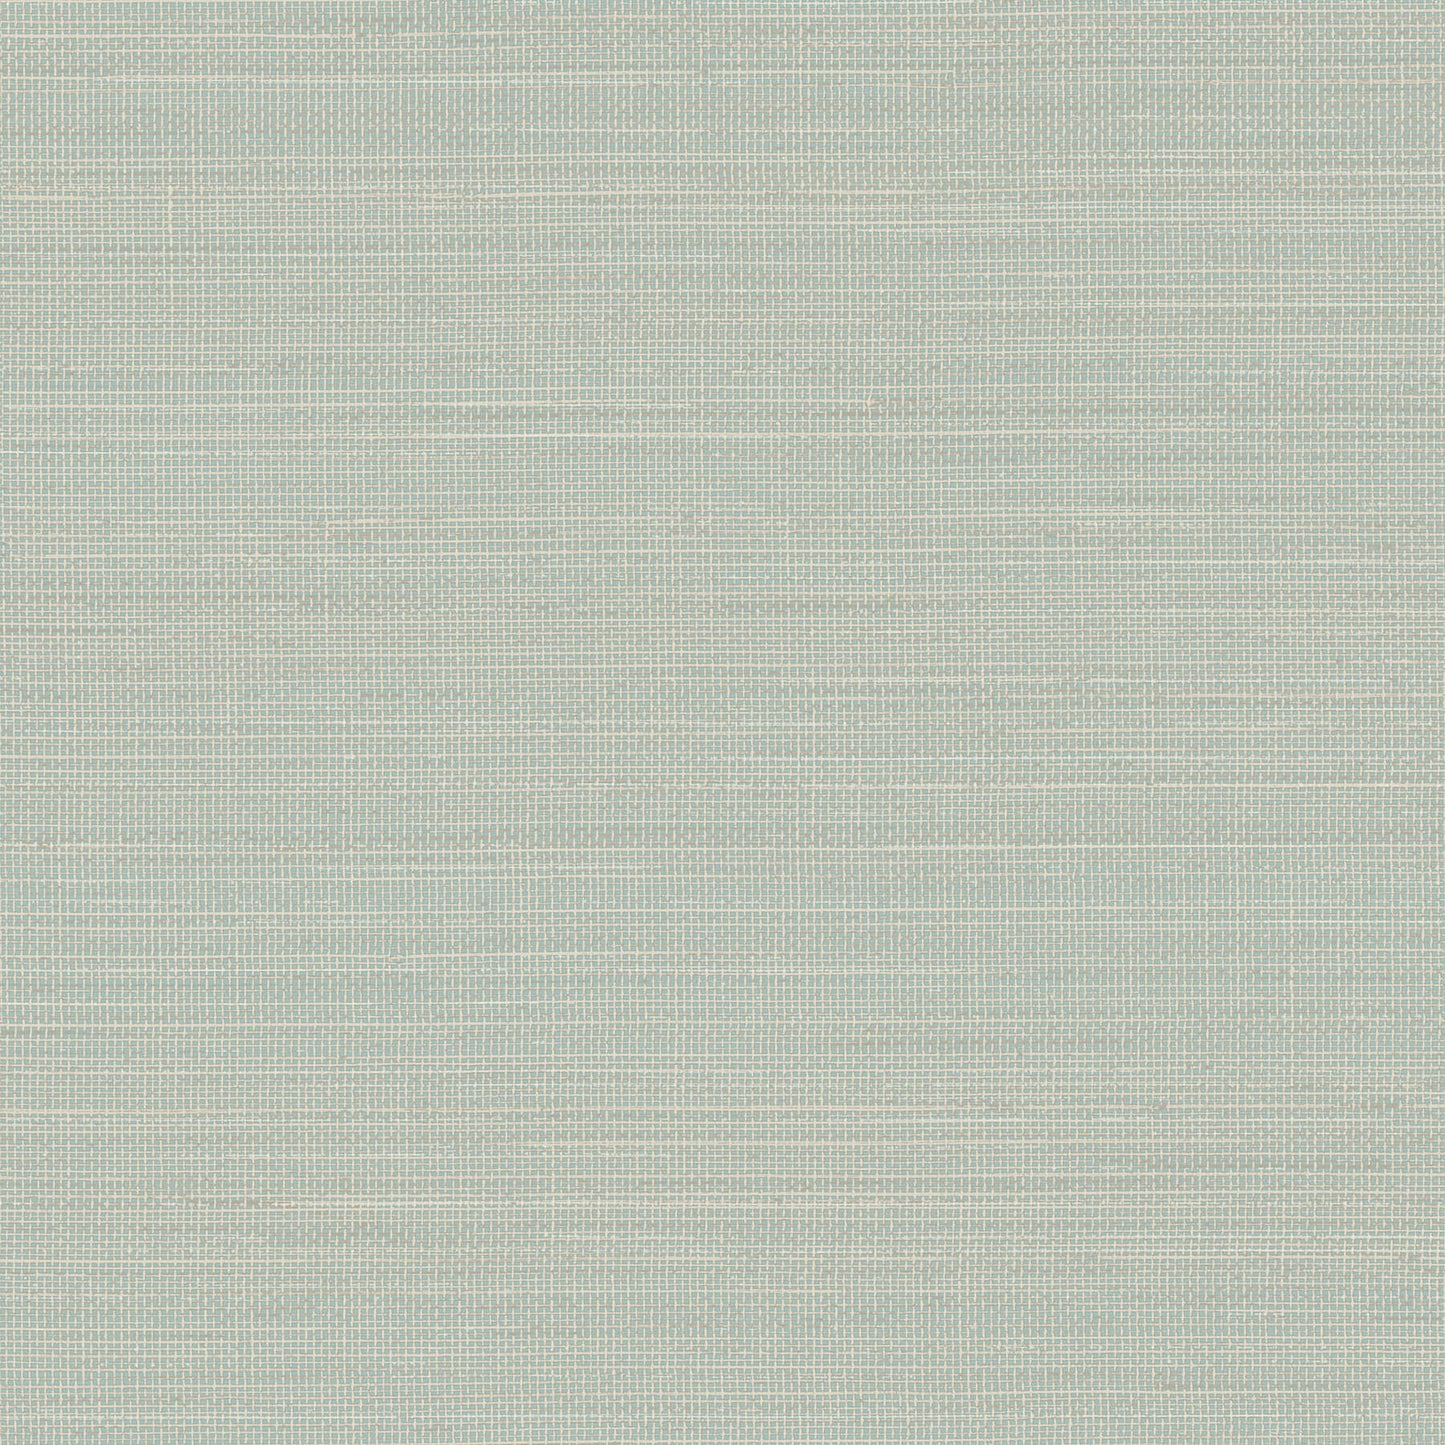 Chesapeake Blue Heron Spinnaker Netting Wallpaper - Aqua